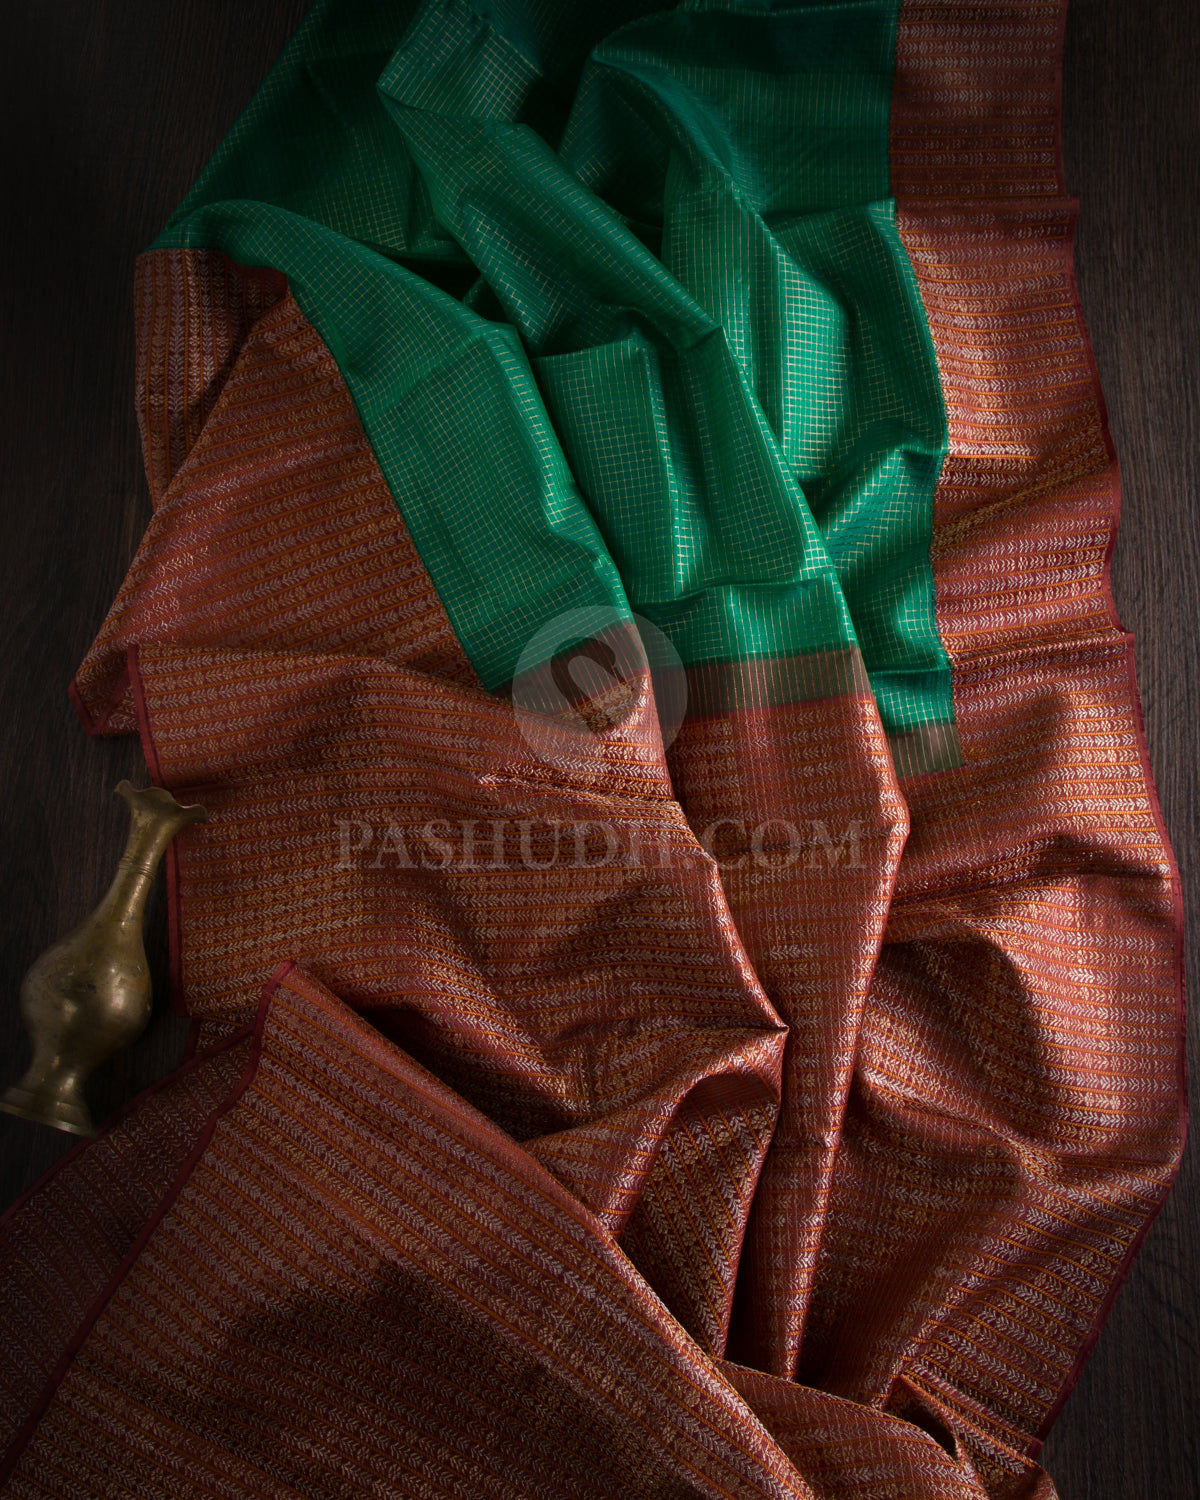 Emerald Green & Chestnut Brown Kanjivaram Silk Saree - S974 - View 1